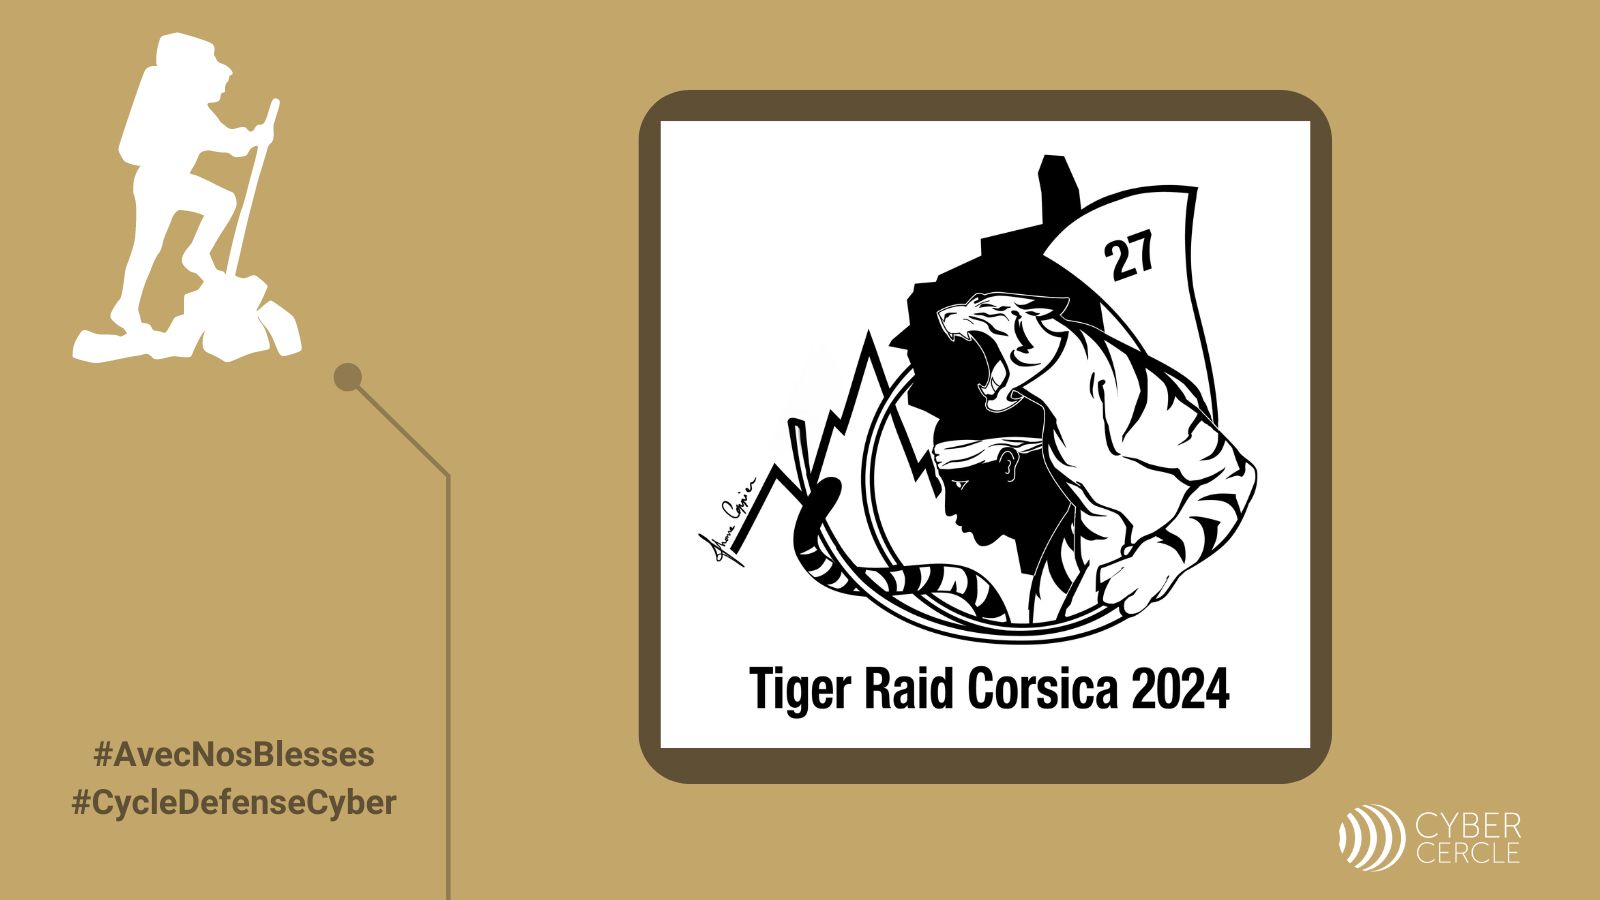 TIGER RAID CORSICA 2024